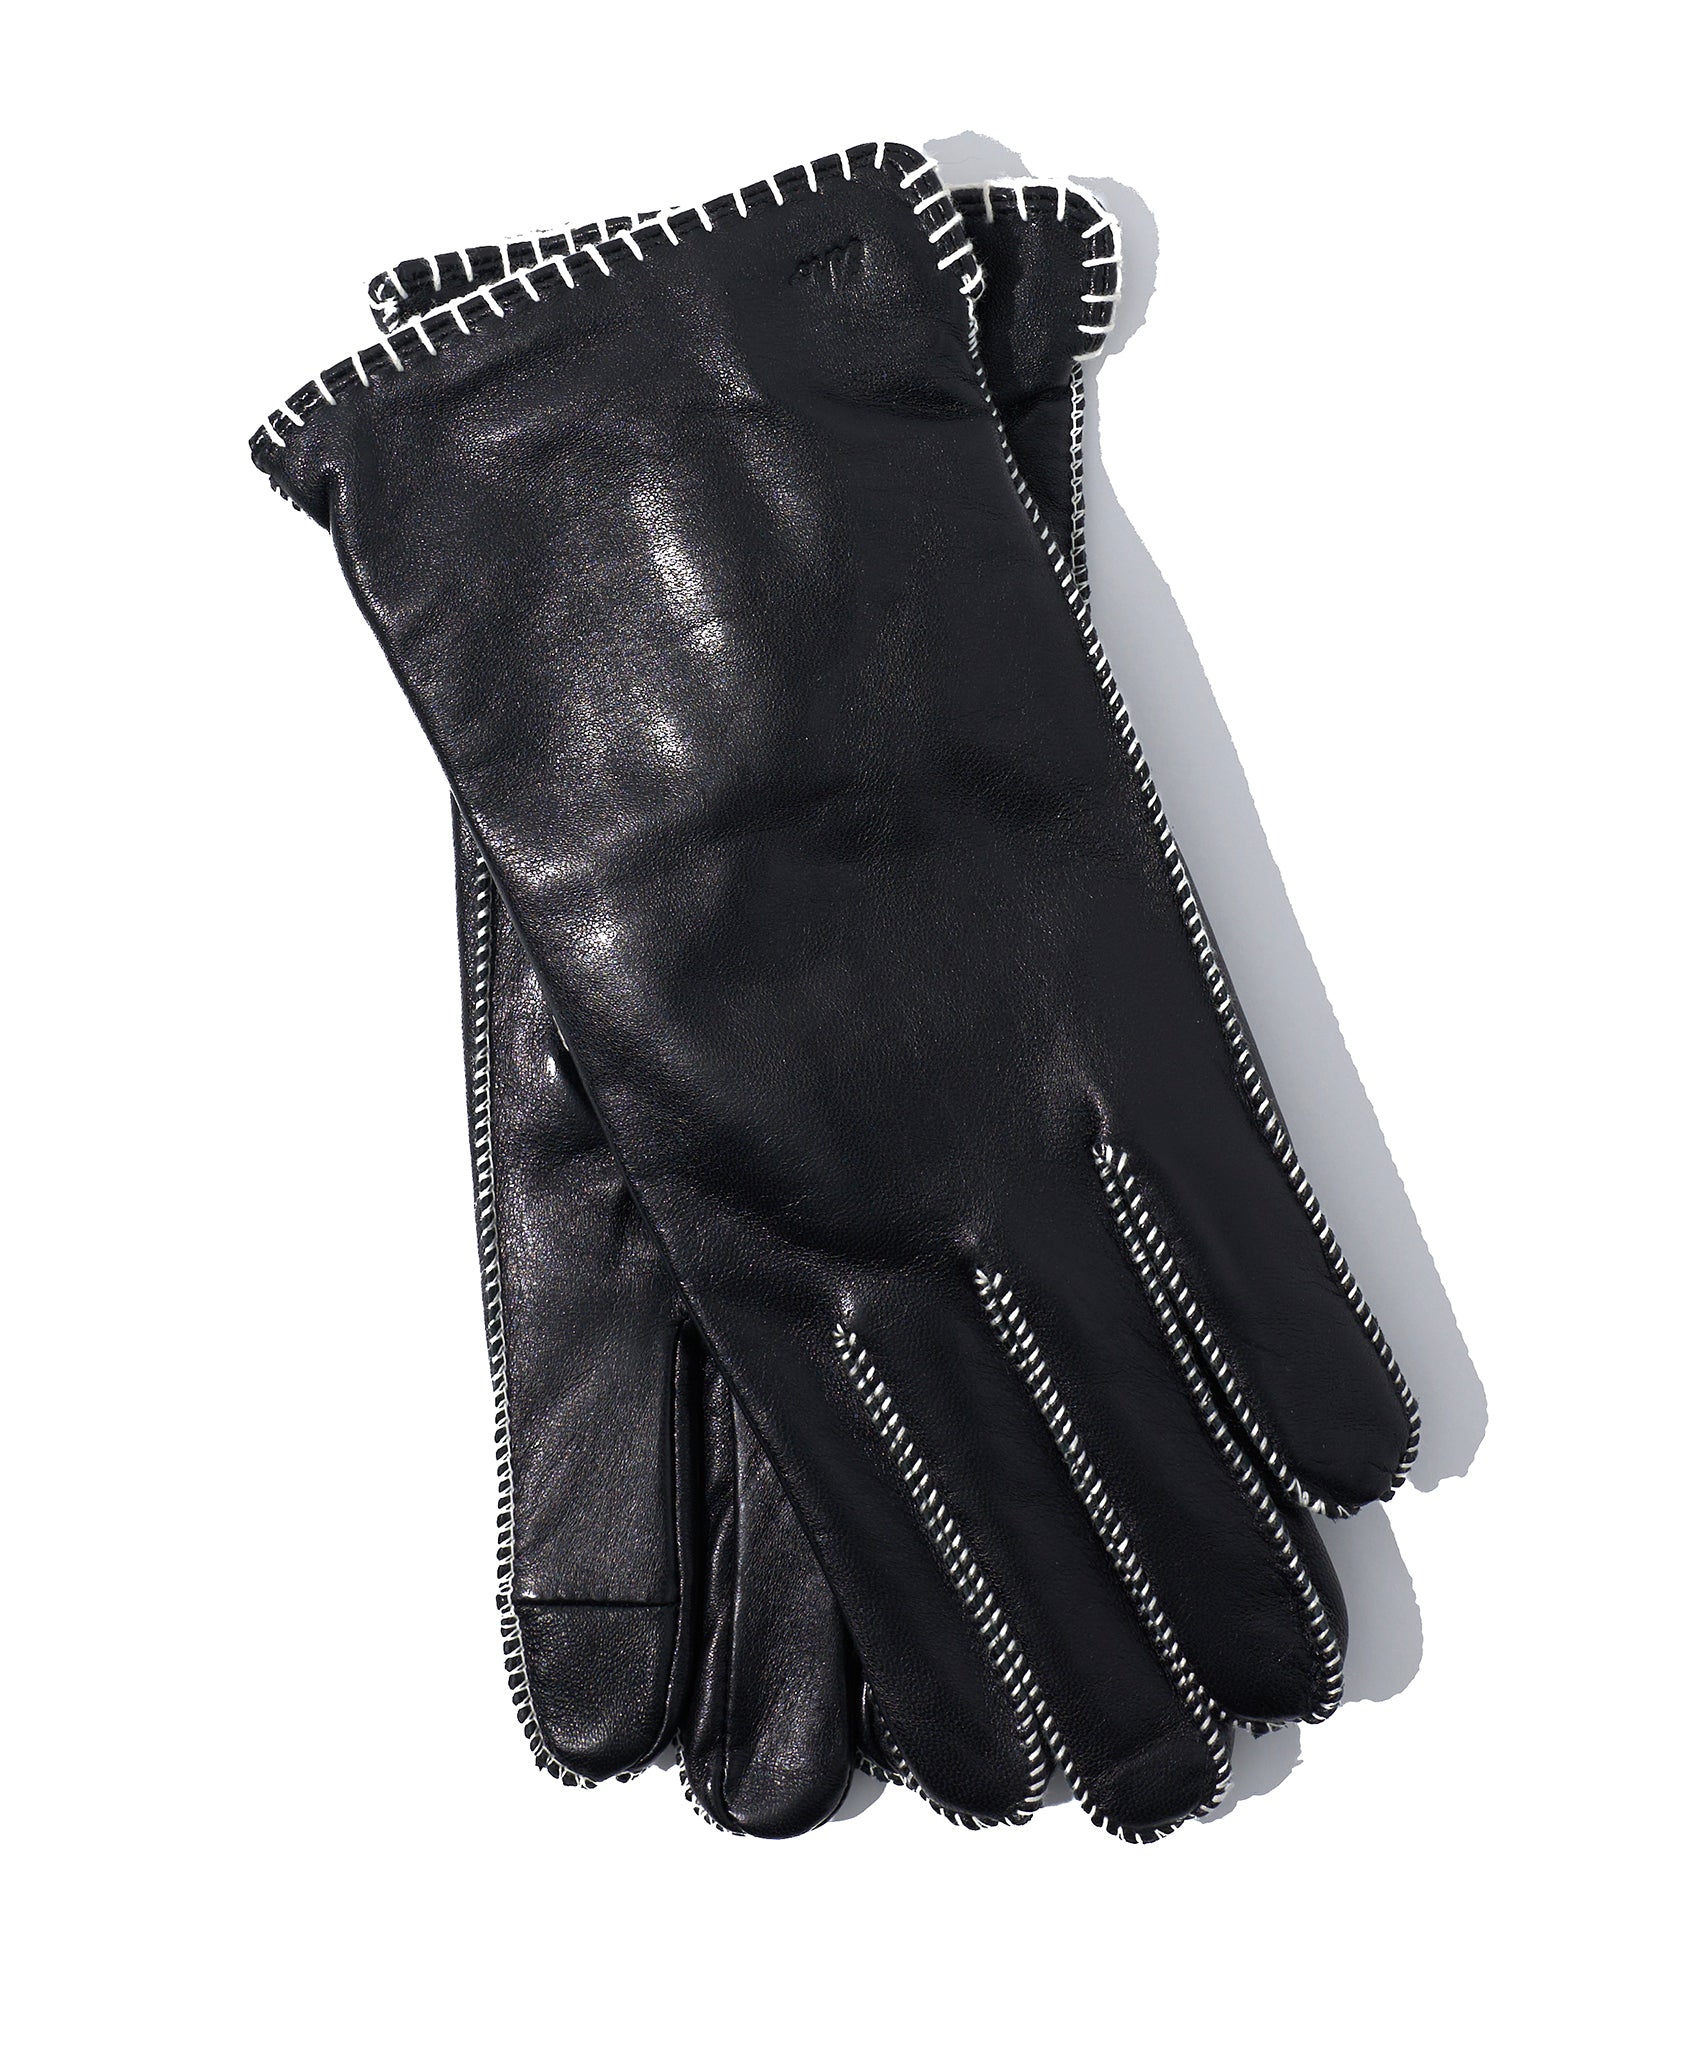 Men's White Leather Formal Dress Gloves, Silk Lining Italian Leather